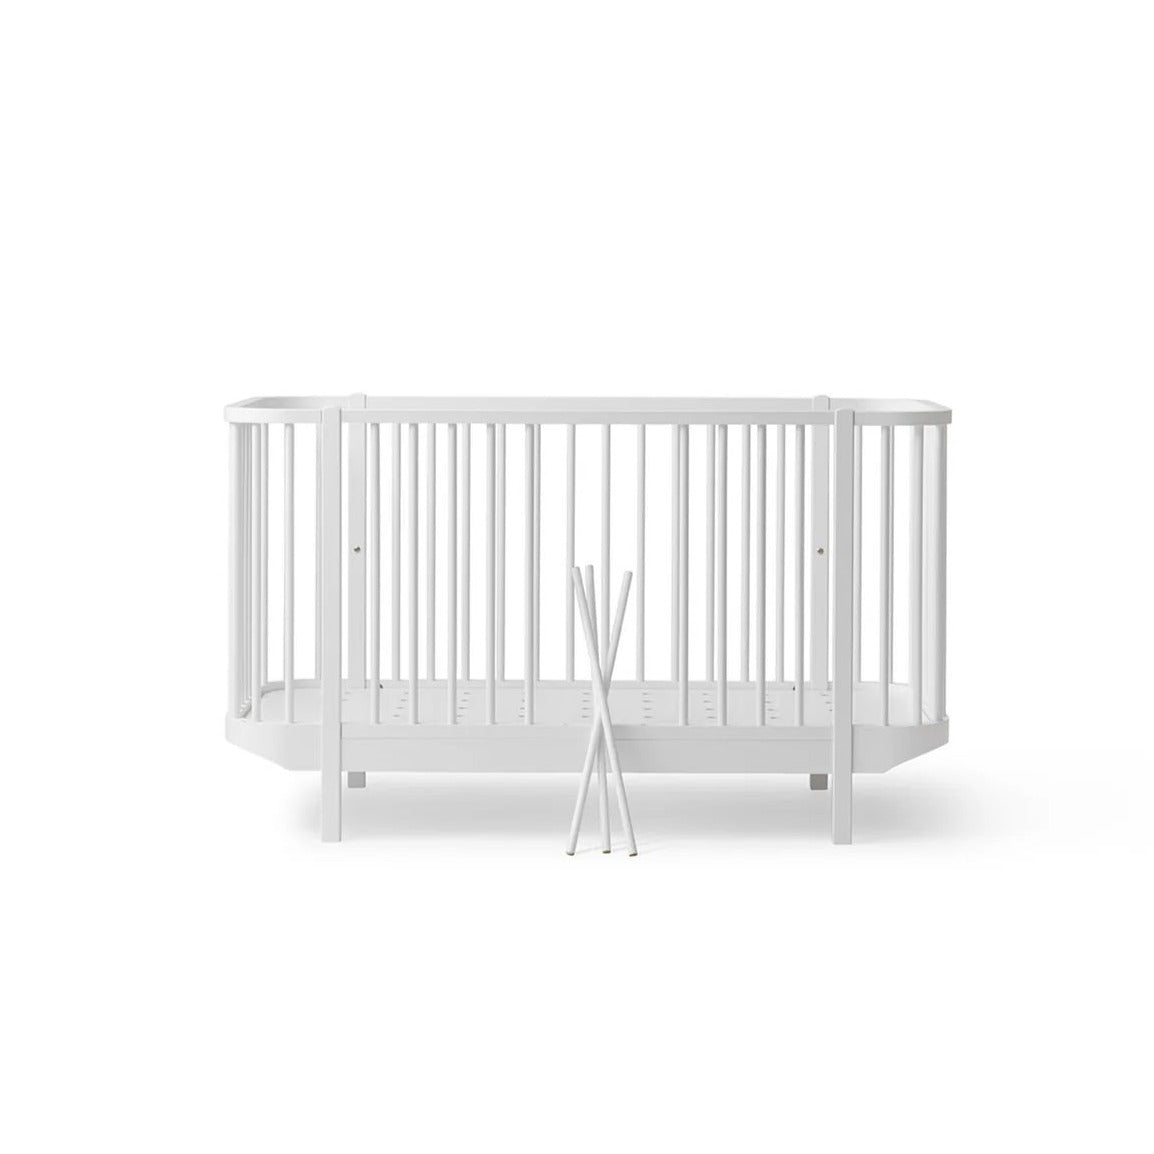 Oliver Furniture Wood Cot - White